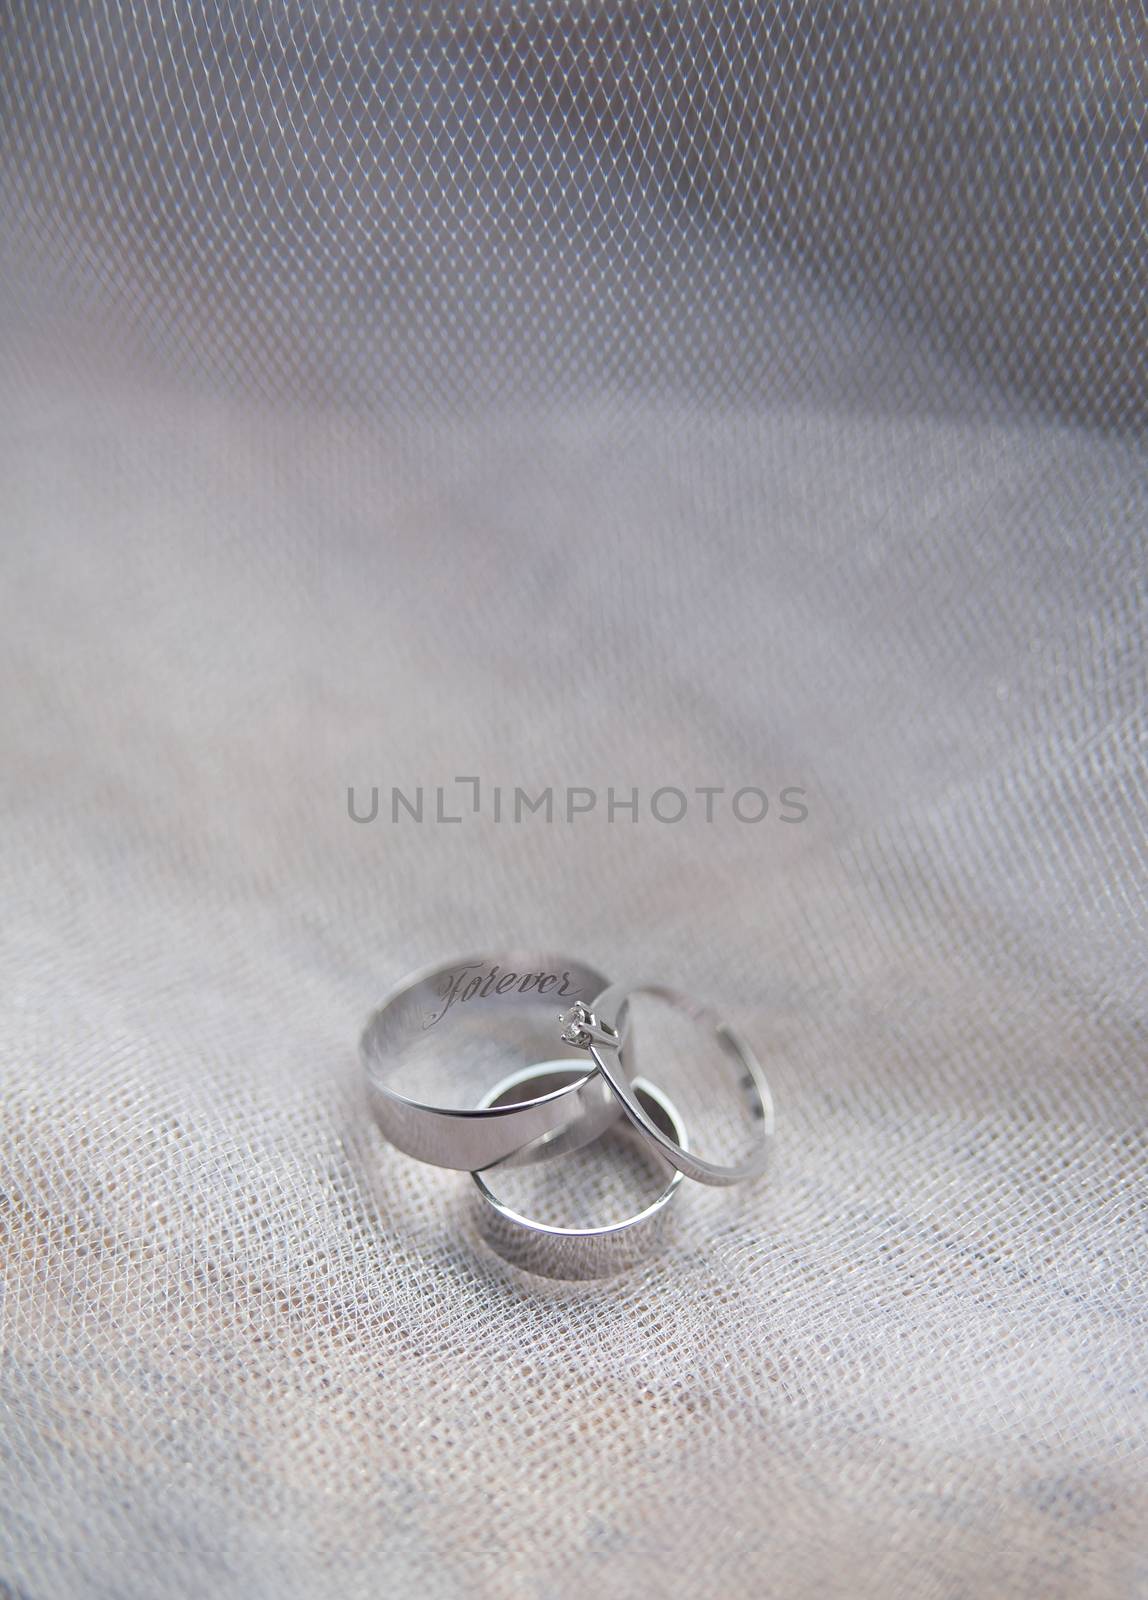 Platinum engagement and wedding ringson on fabric background.